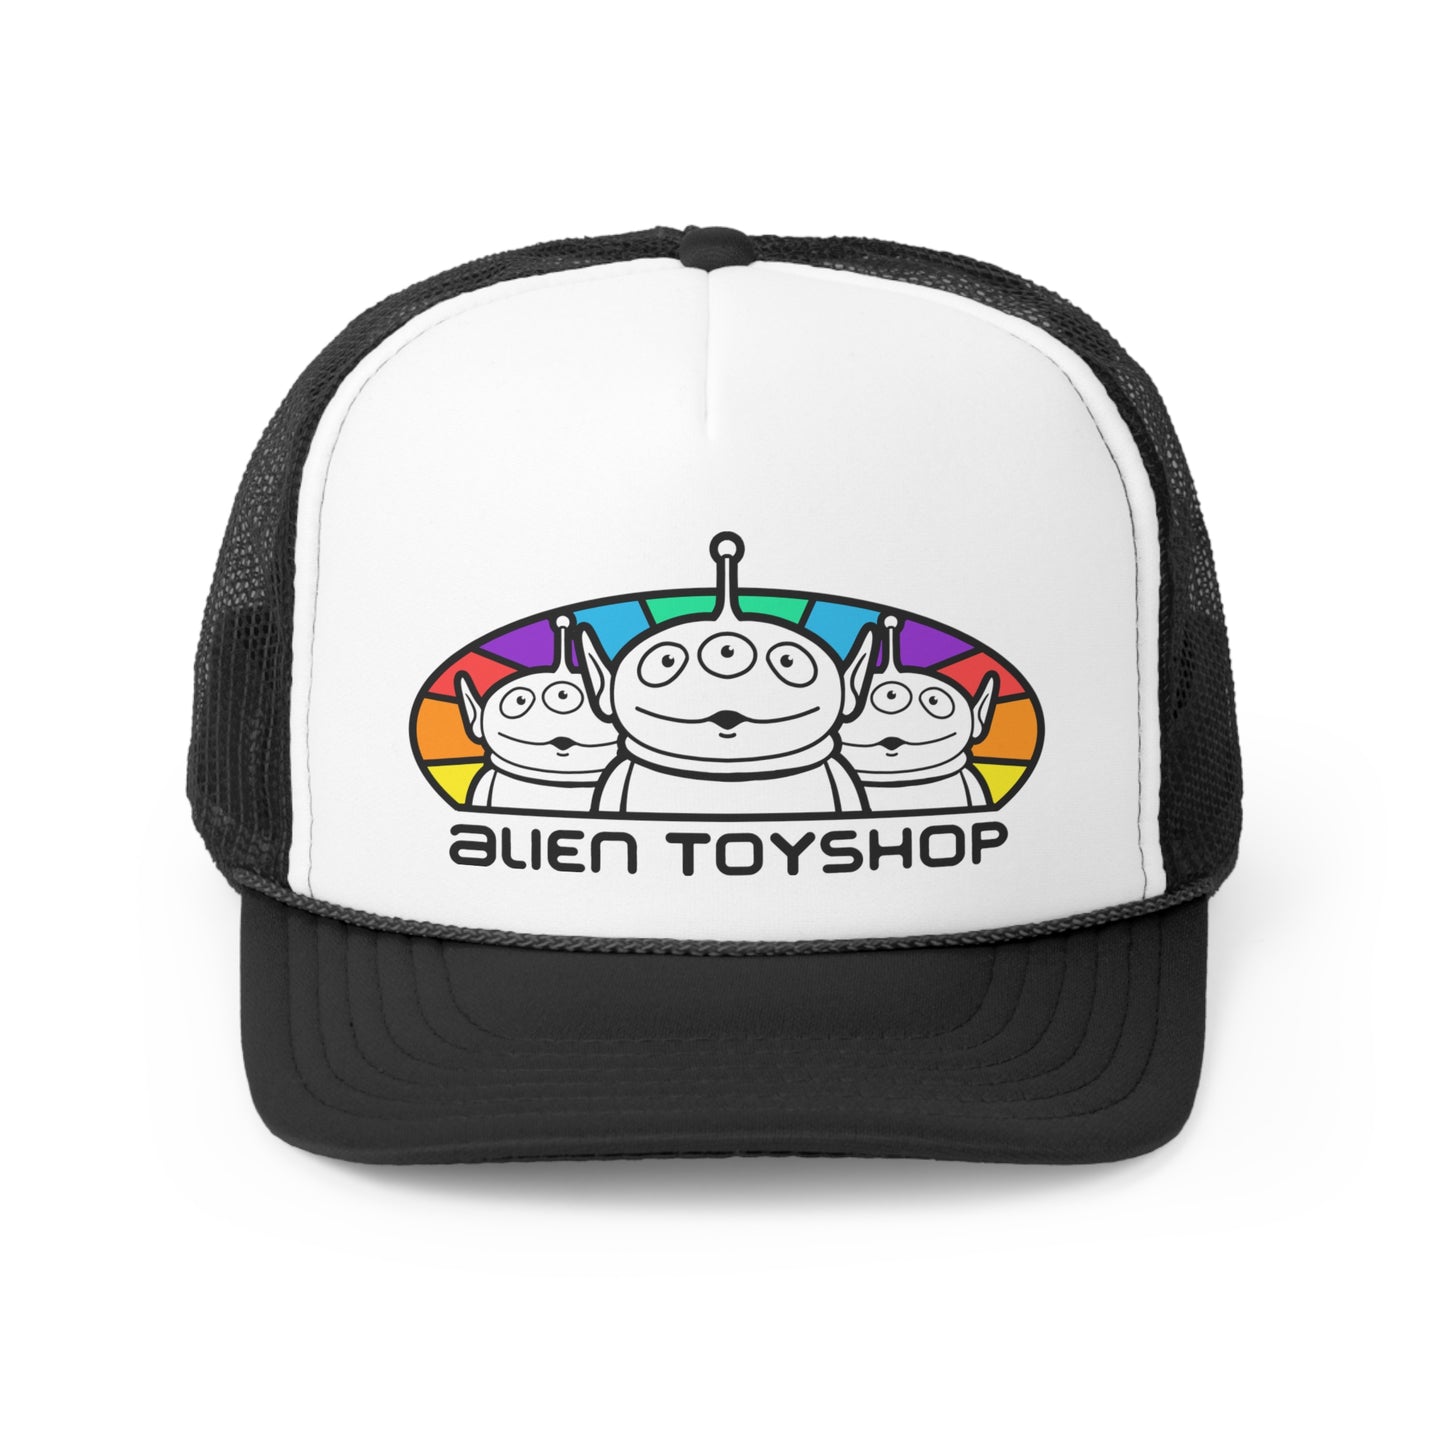 Alien Toyshop trucker hat